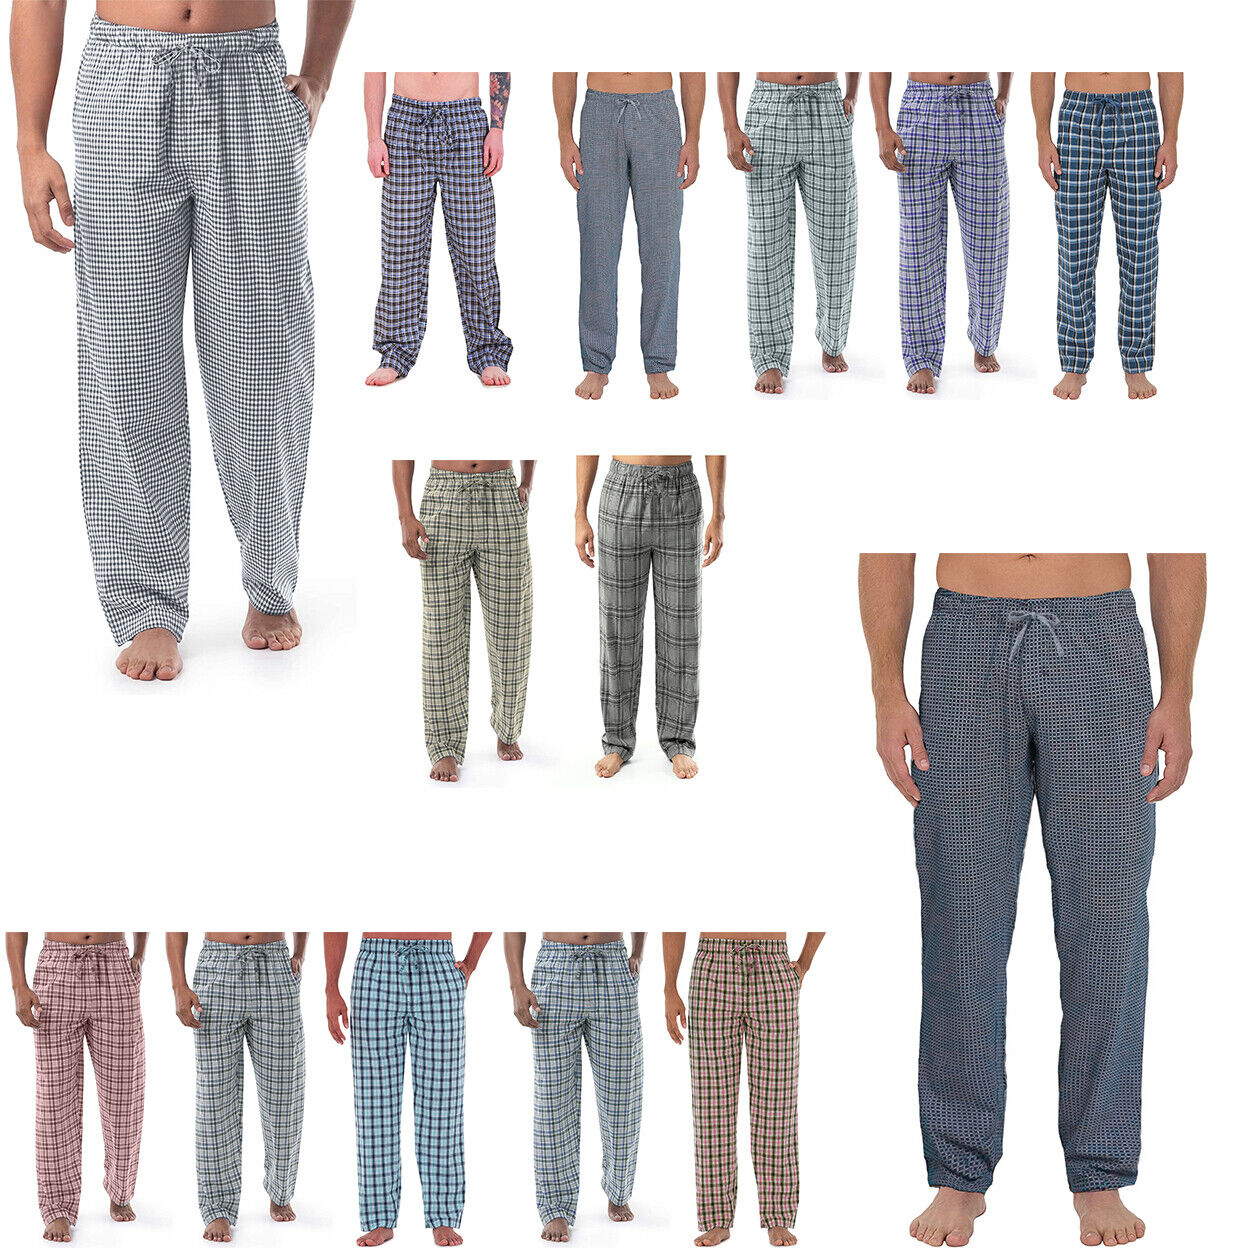 5-Pack: Men's Ultra-Soft Plaid Cotton Jersey Knit Comfy Sleep Lounge Pajama Pants - Xx-large